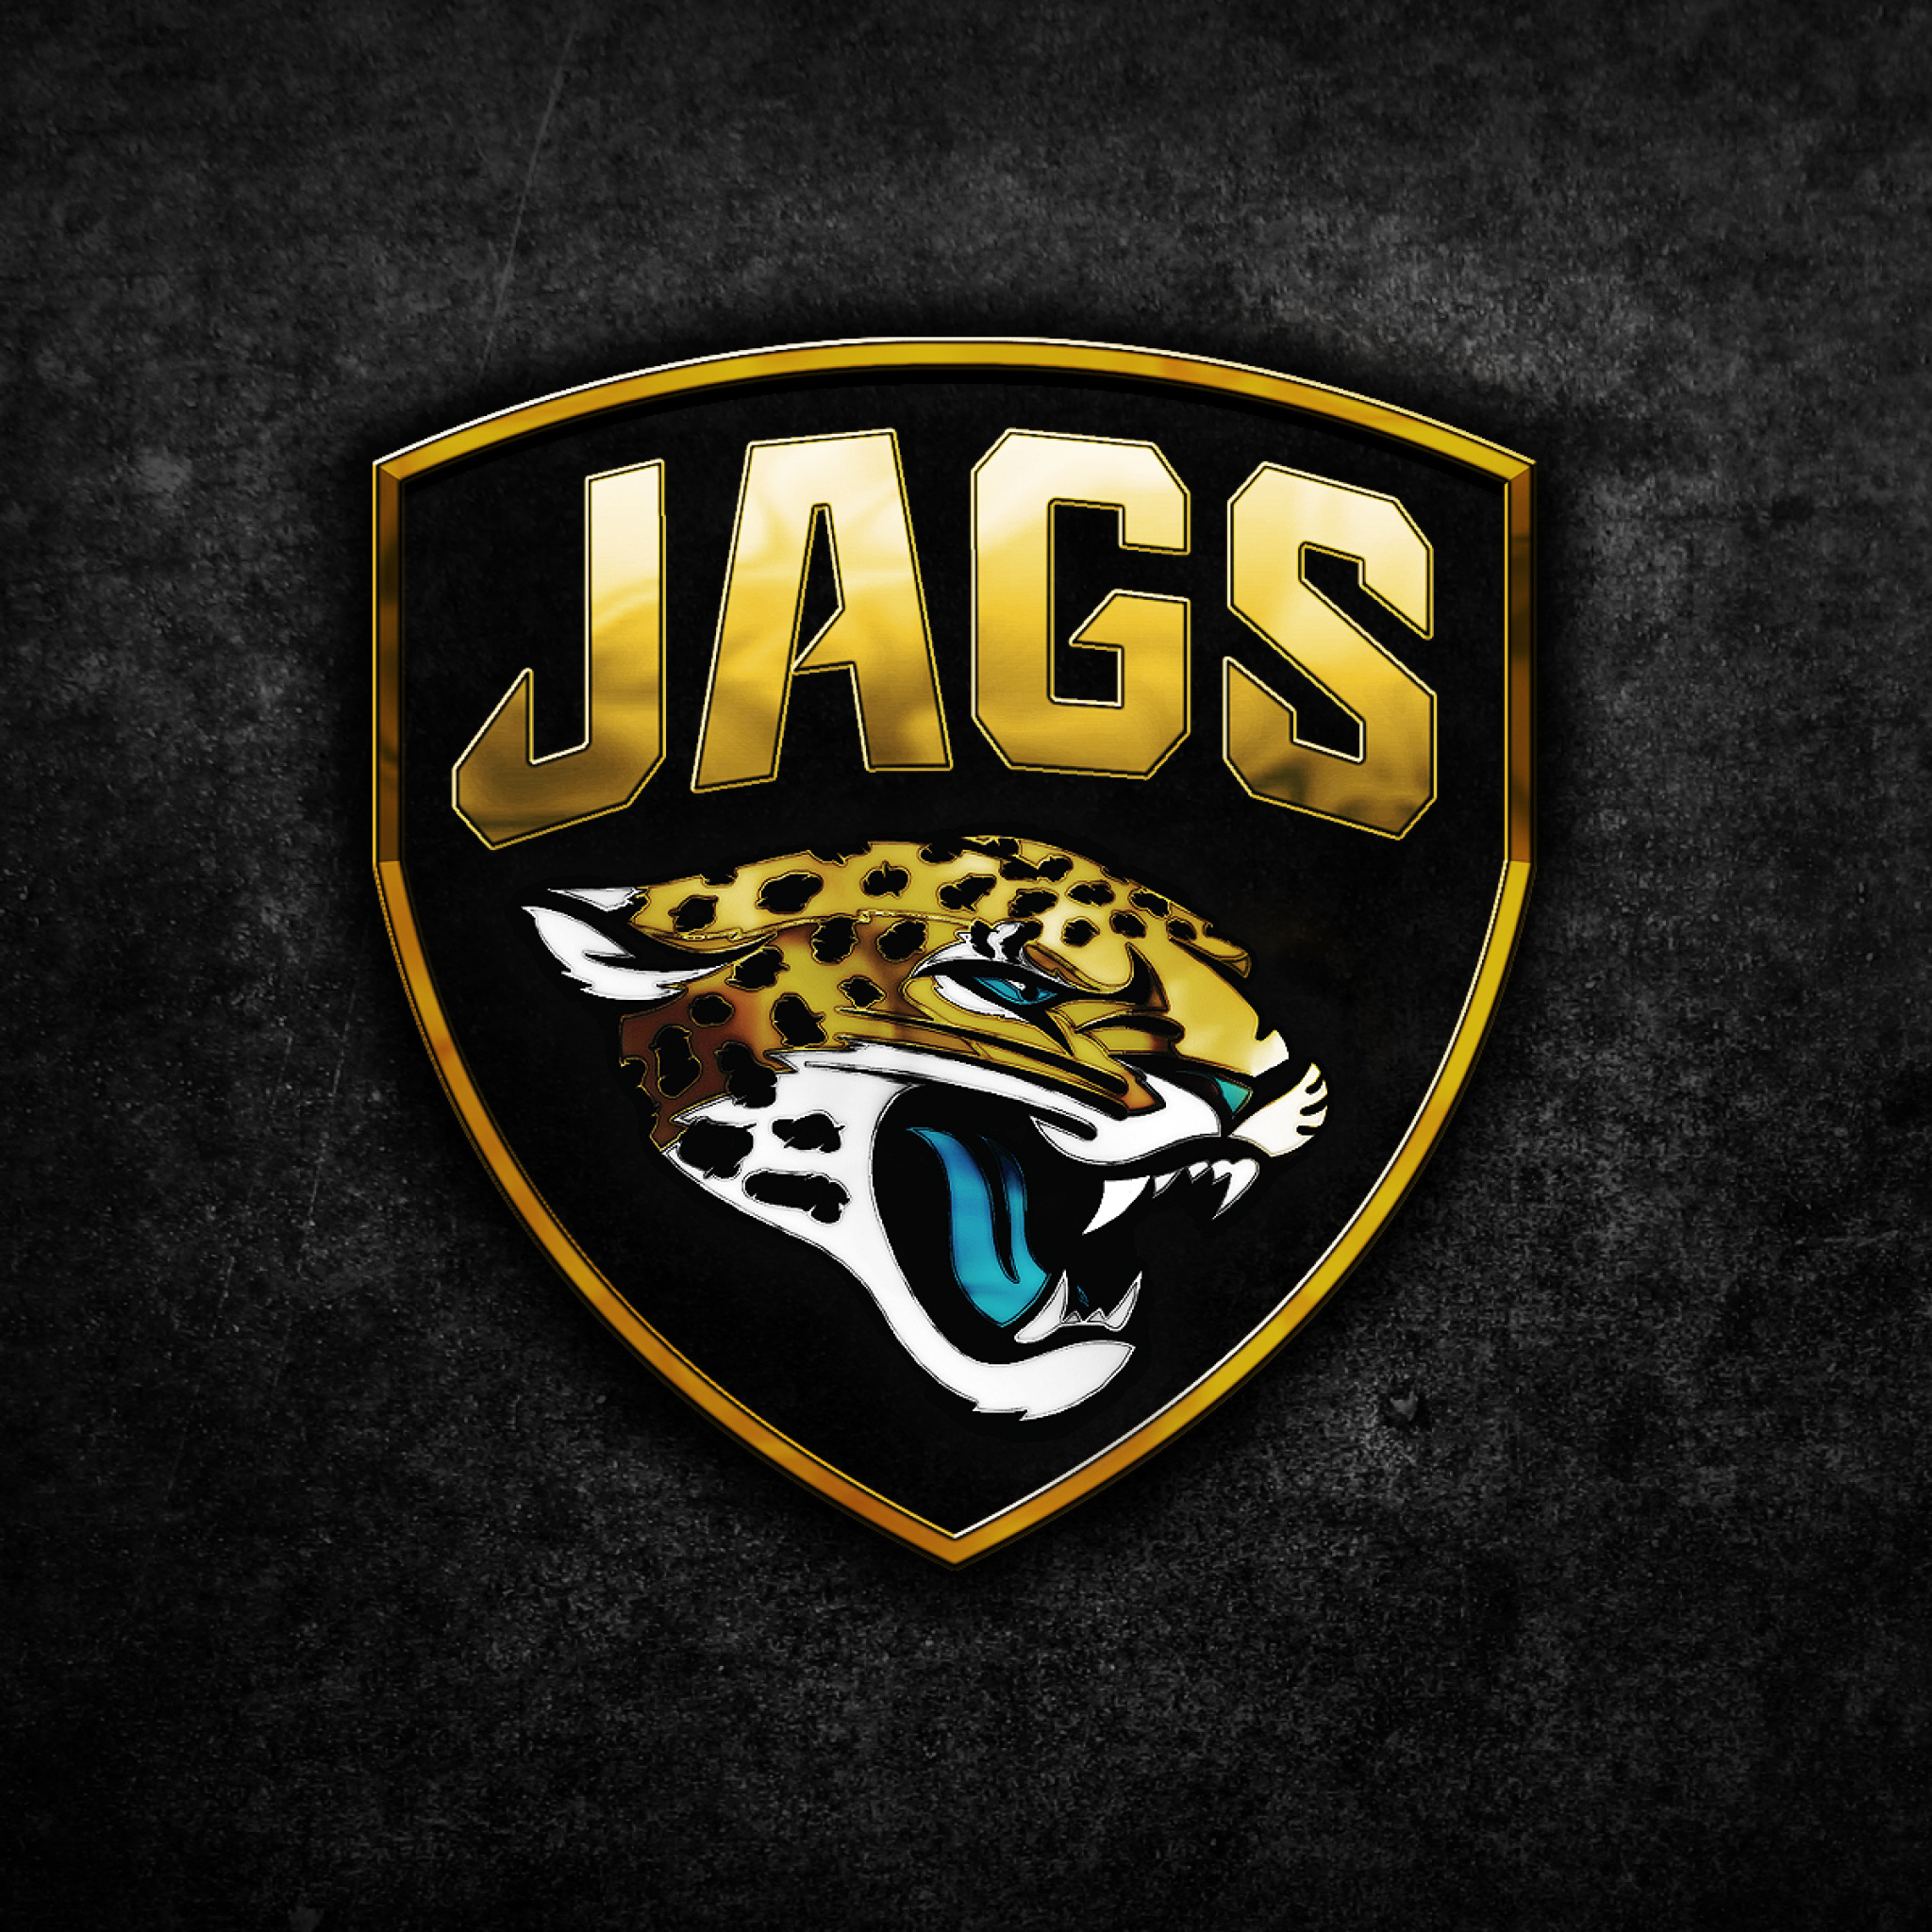 Das Jacksonville Jaguars NFL Team Logo Wallpaper 2048x2048